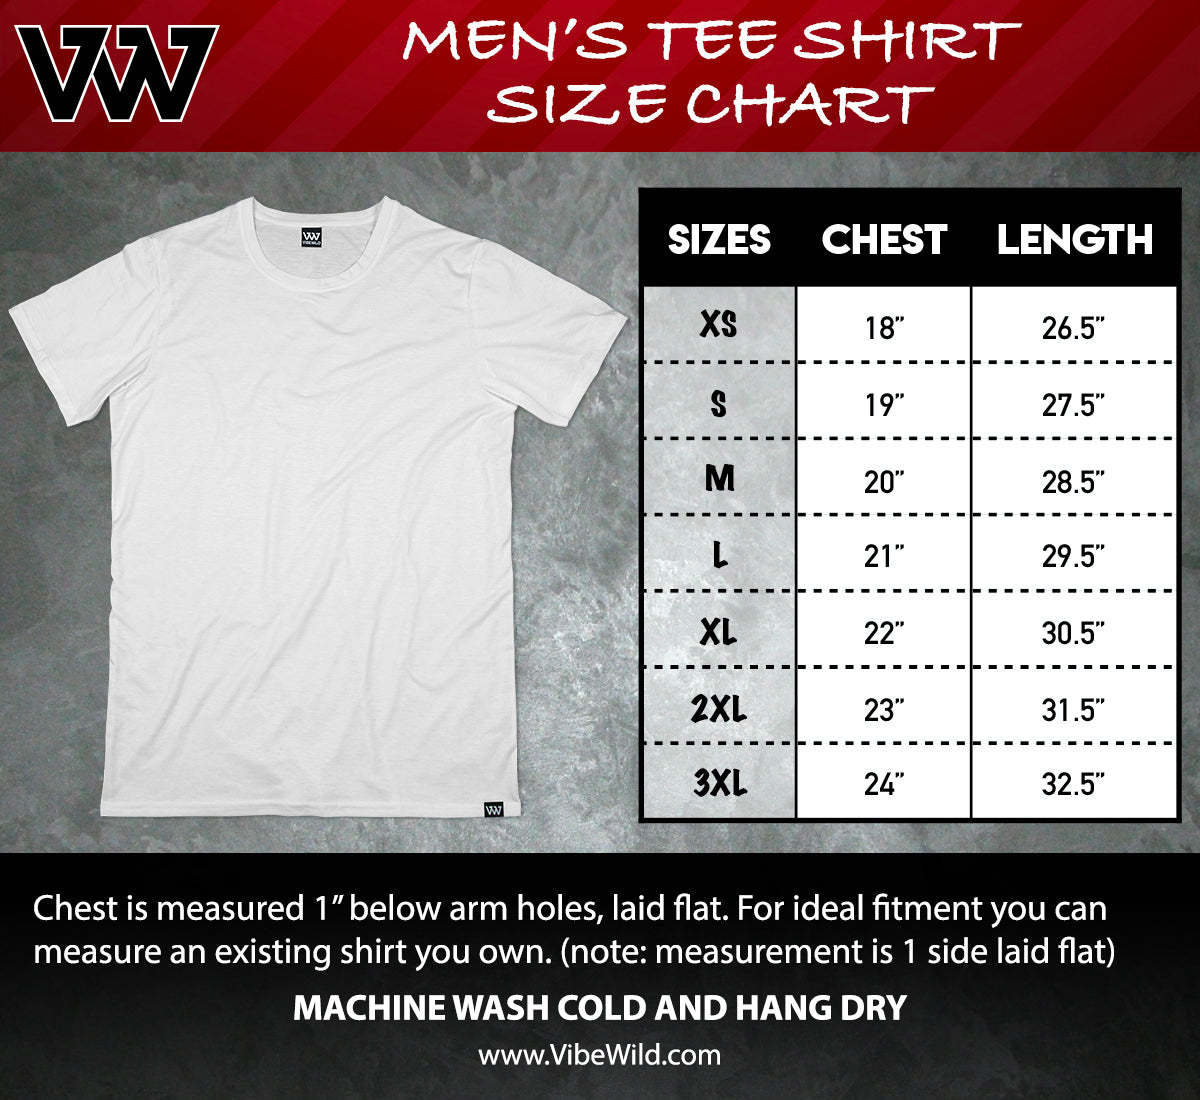 Vibe Wild Men's Tee Shirt Size Chart